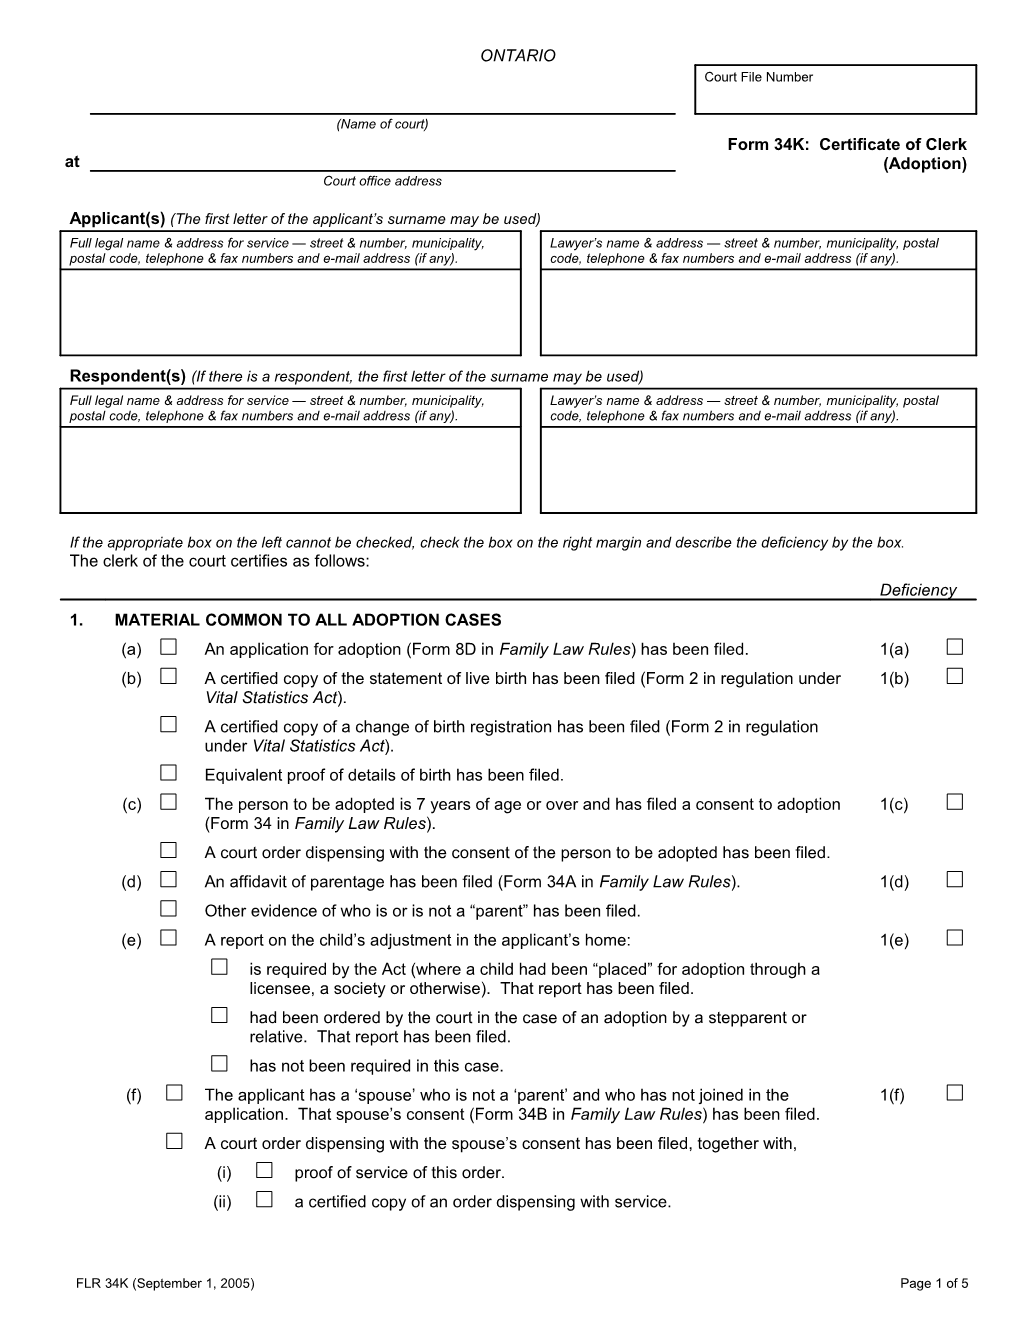 Form 34K Certificate of Clerk (Adoption)